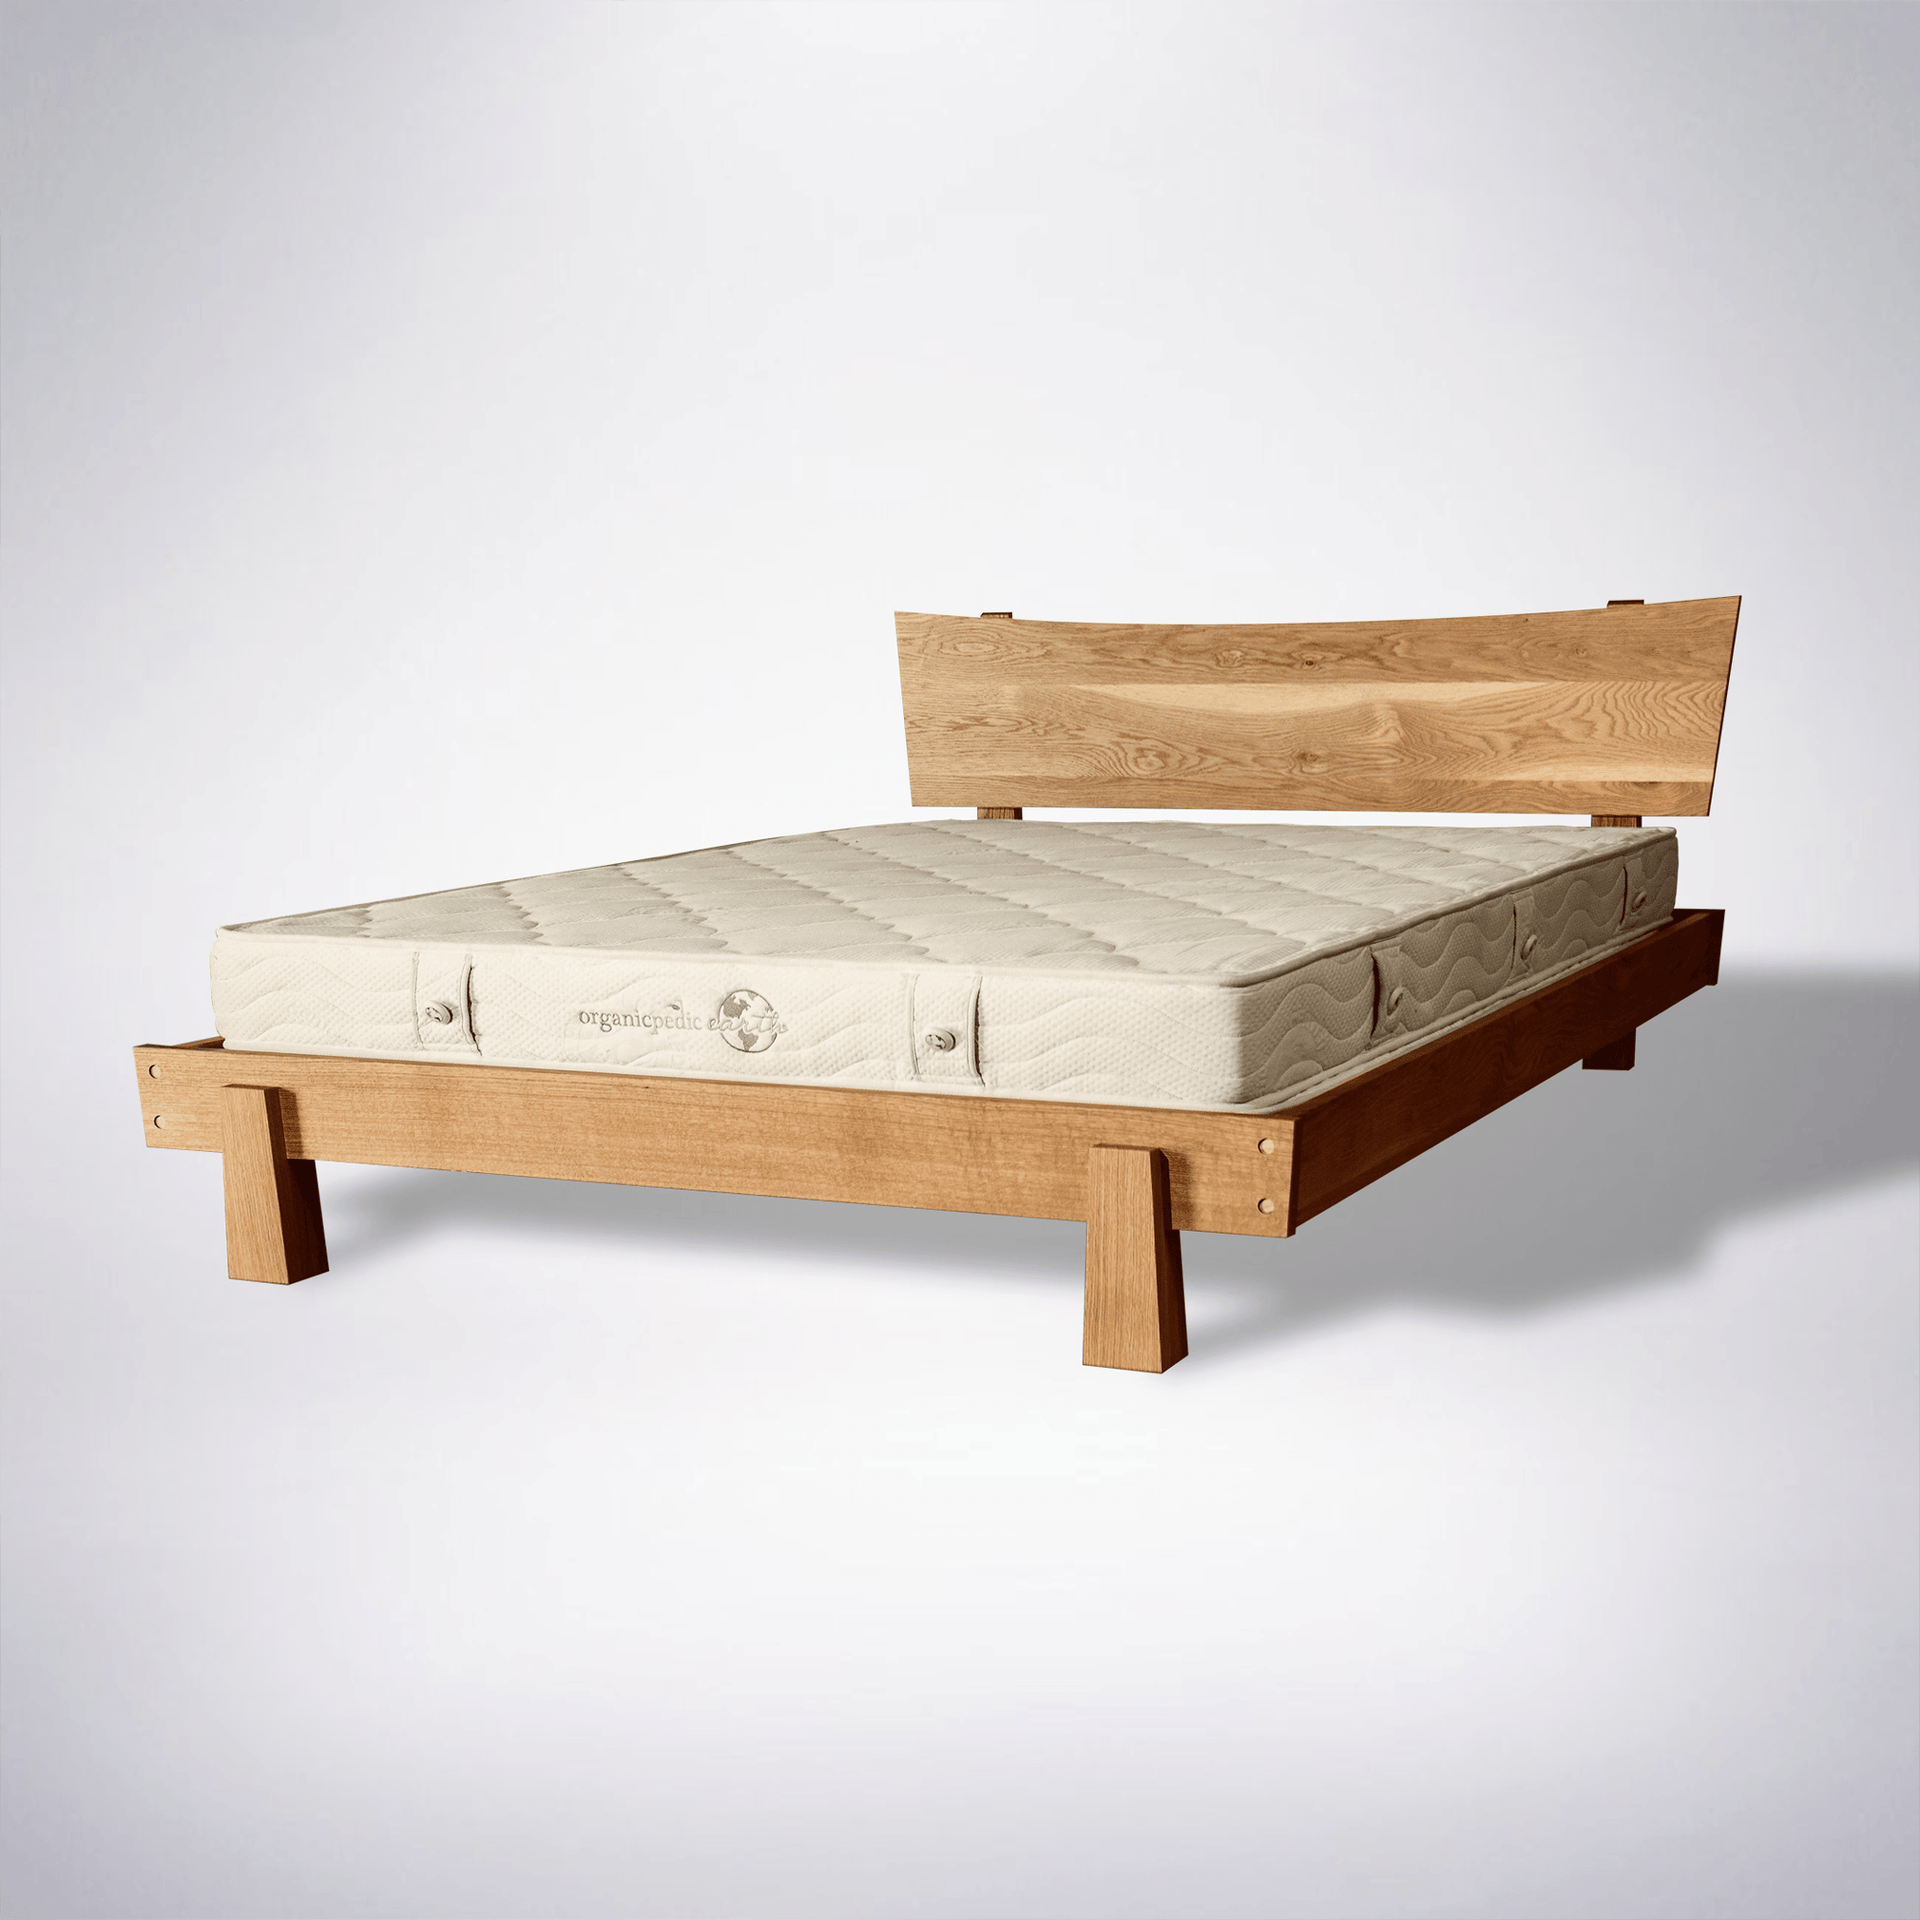 Hard white oak platform bed made in Columbus, Ohio